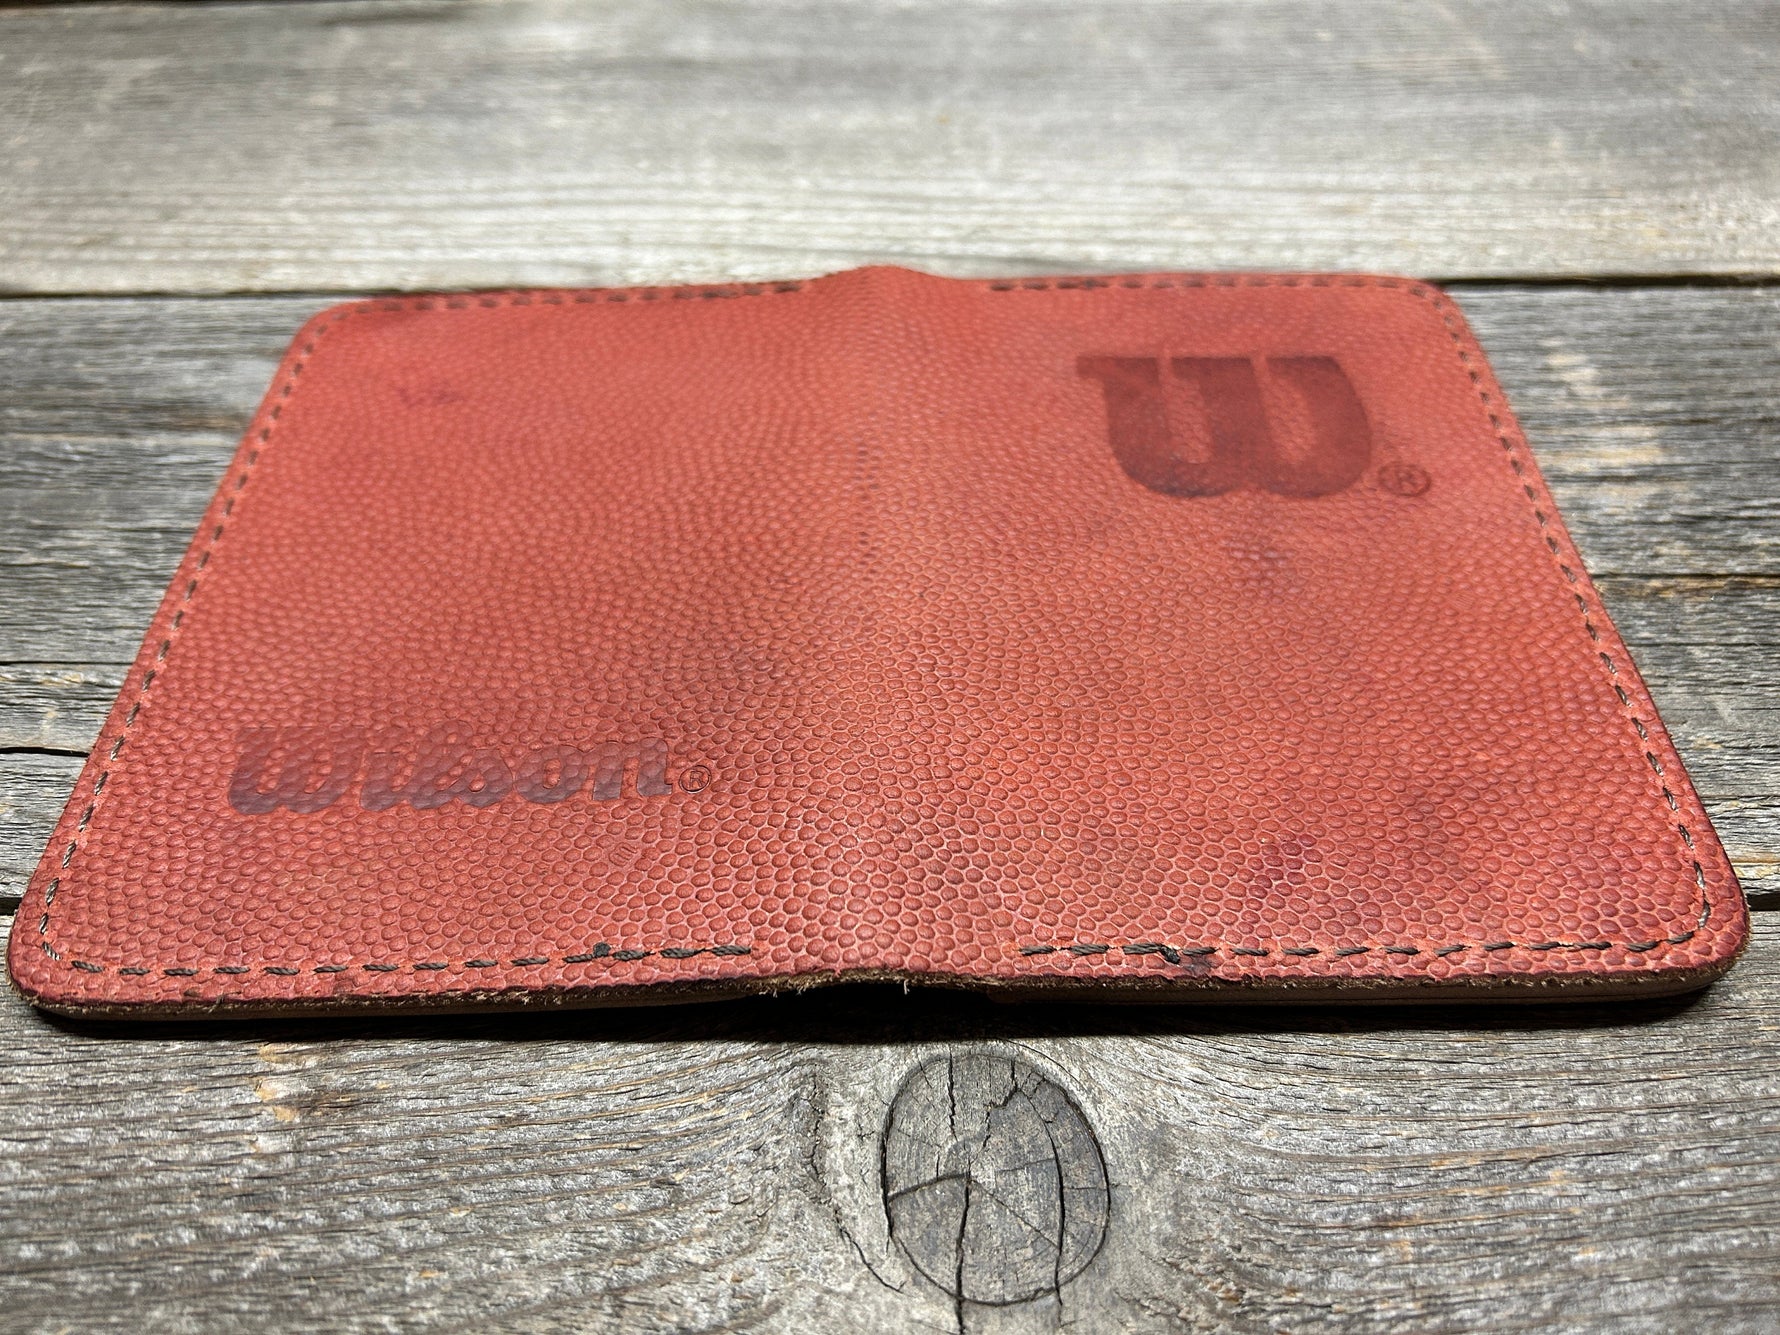 Horween (Wilson NFL Football) Leather Passport Cover!